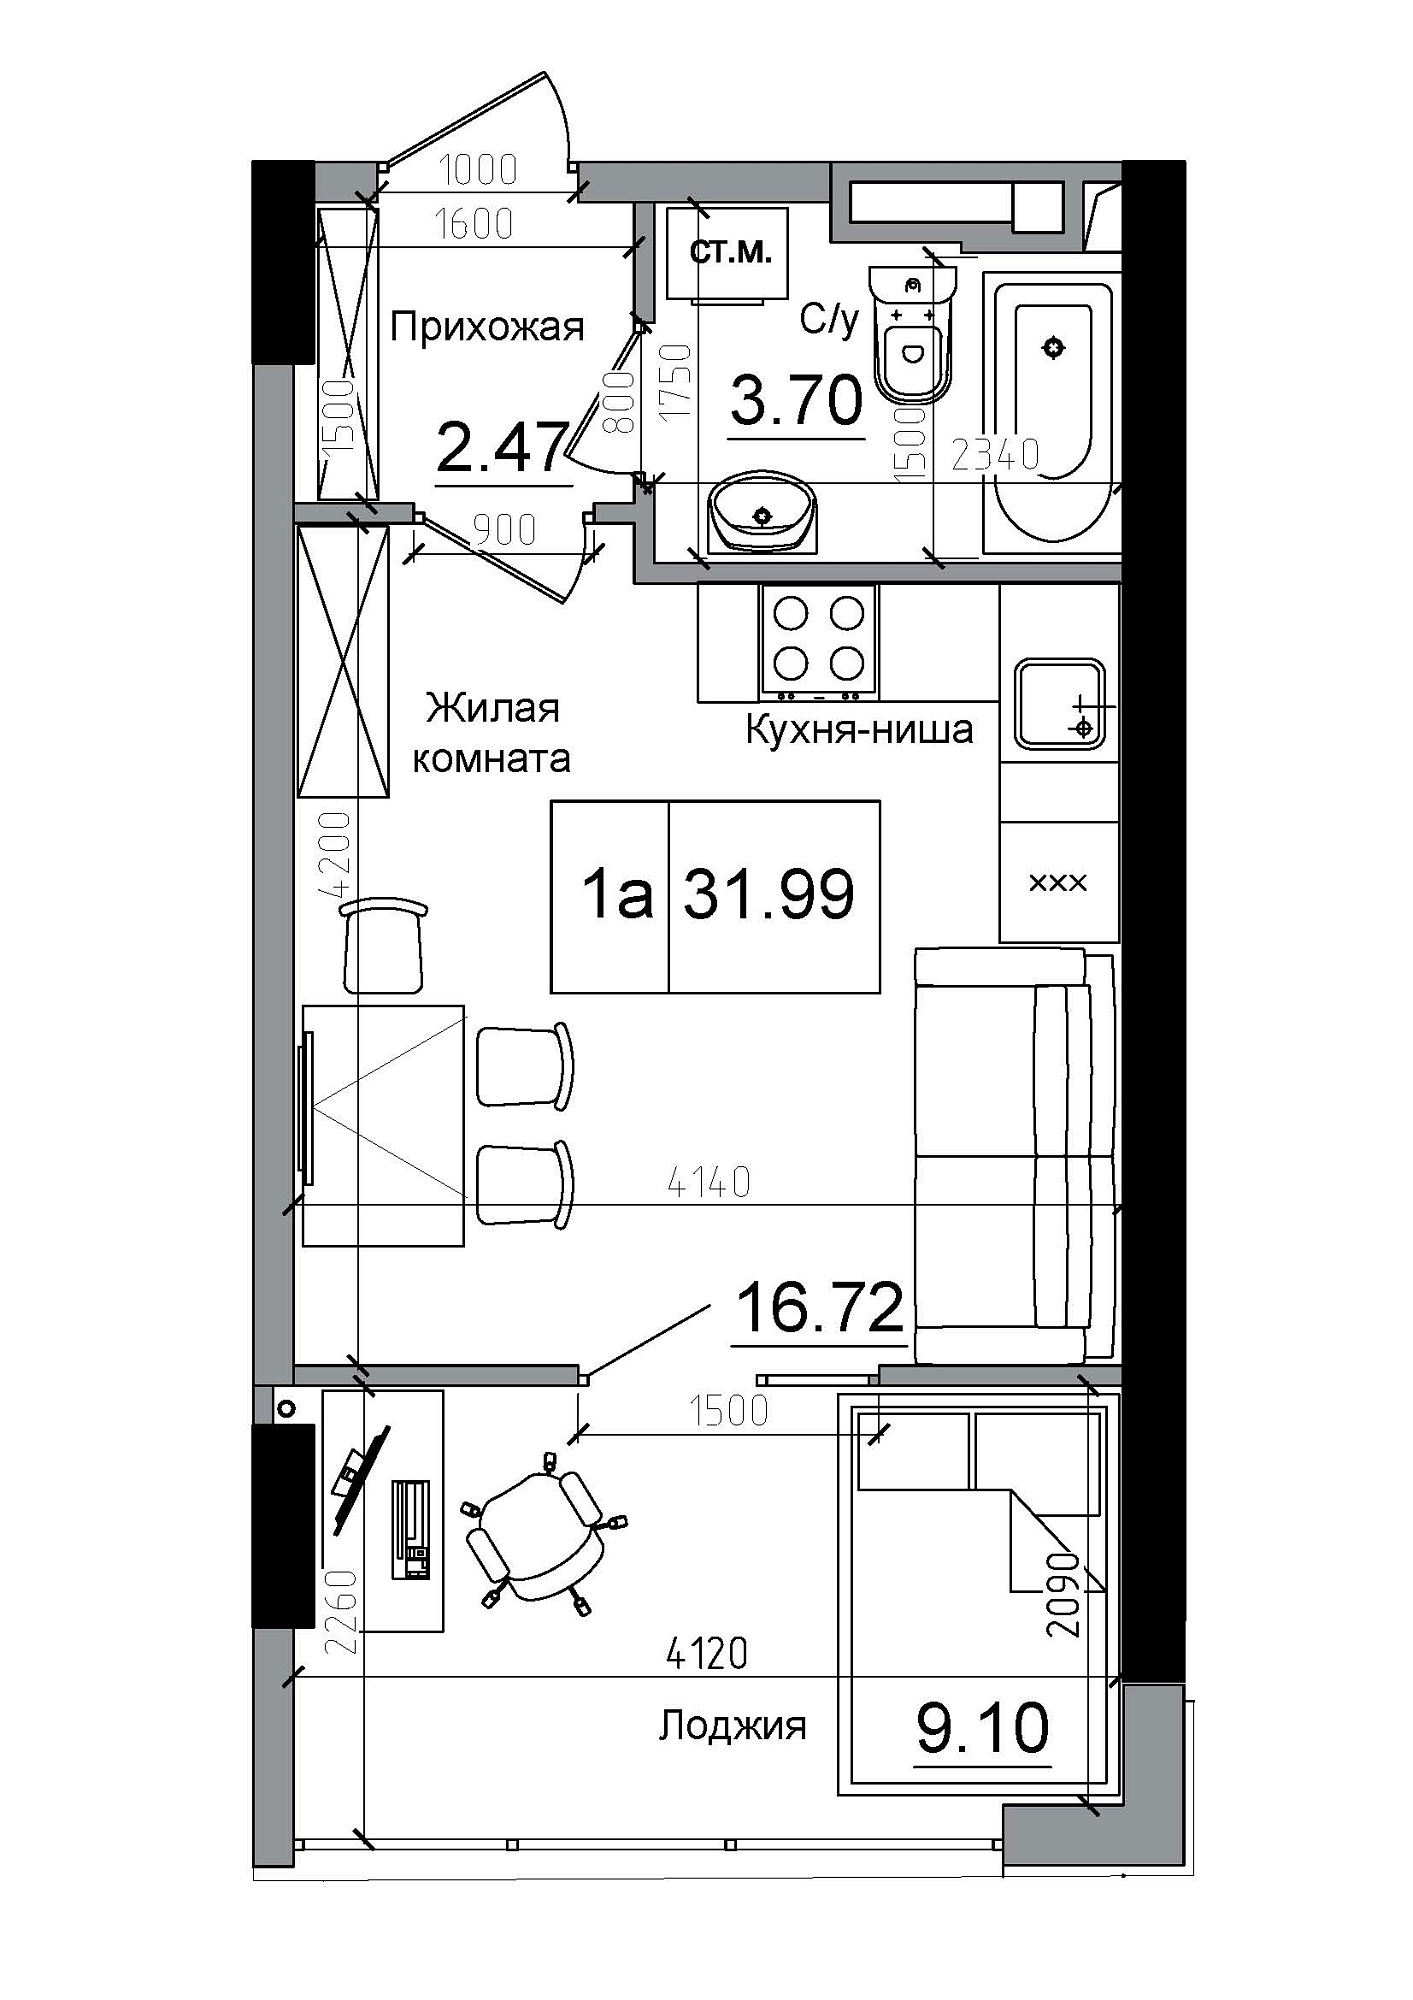 Planning Smart flats area 31.99m2, AB-12-06/00001.